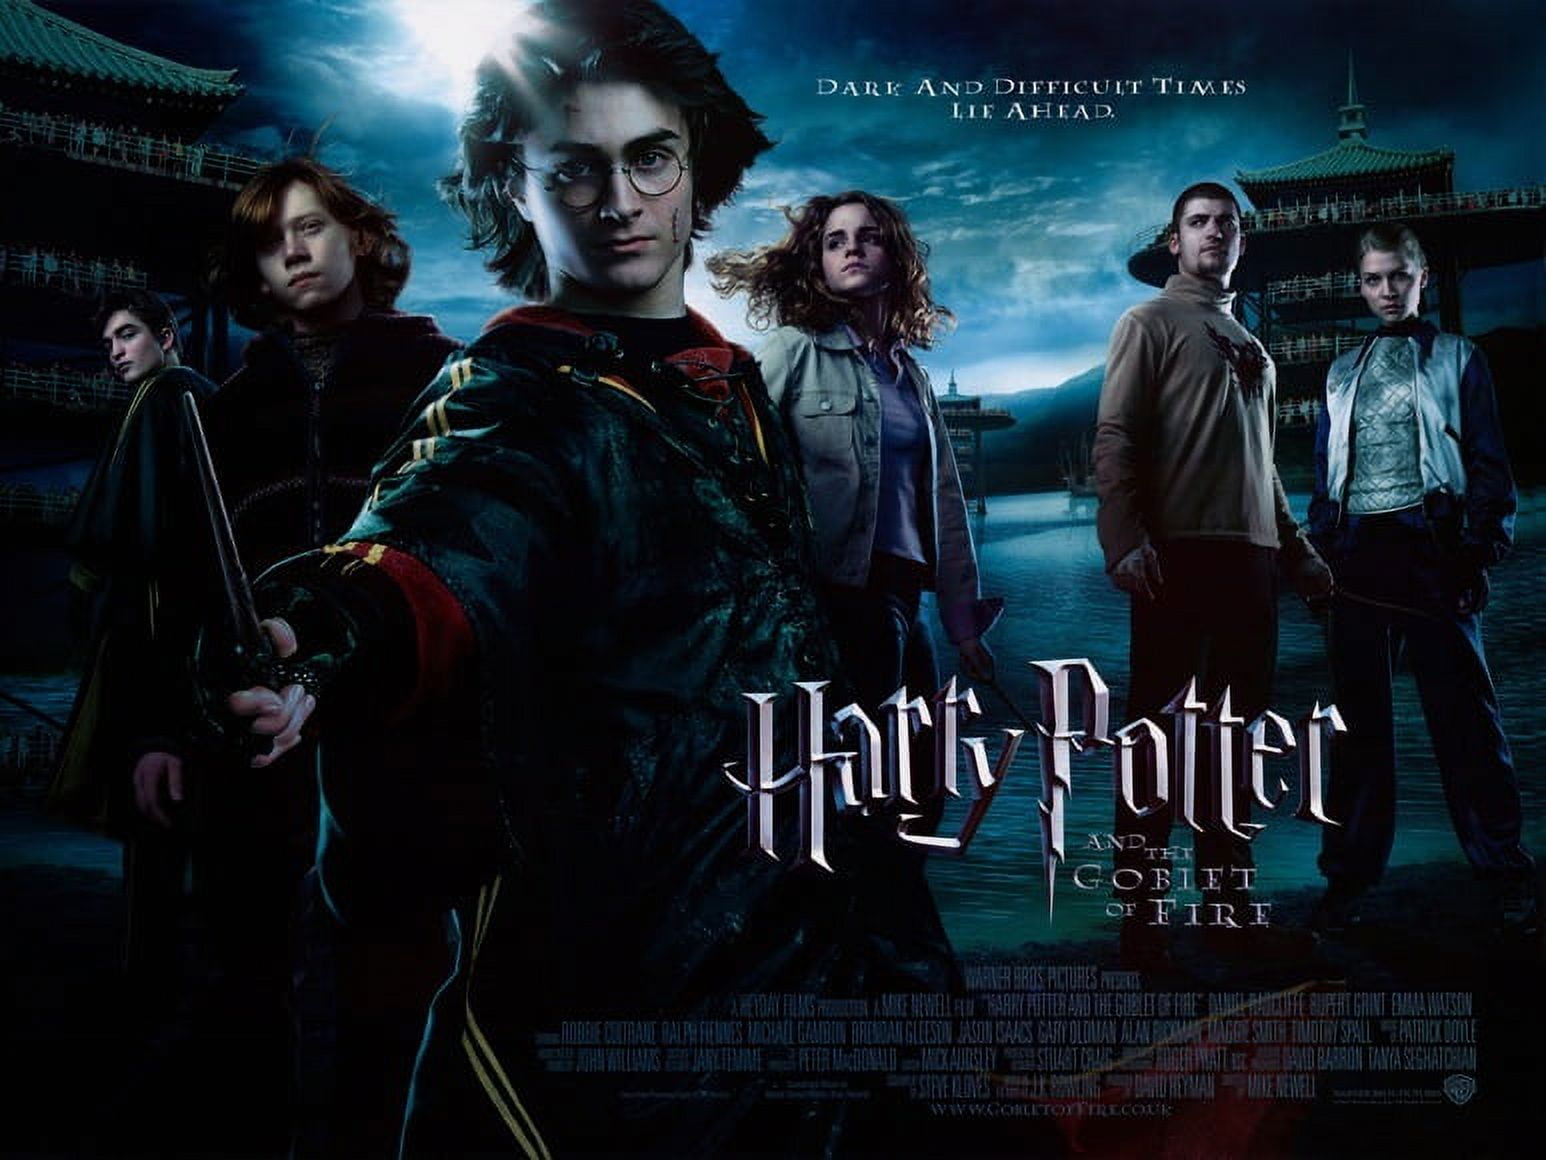 Poster: Harry Potter - Goblet of Fire Movie Poster 24x36 – BananaRoad